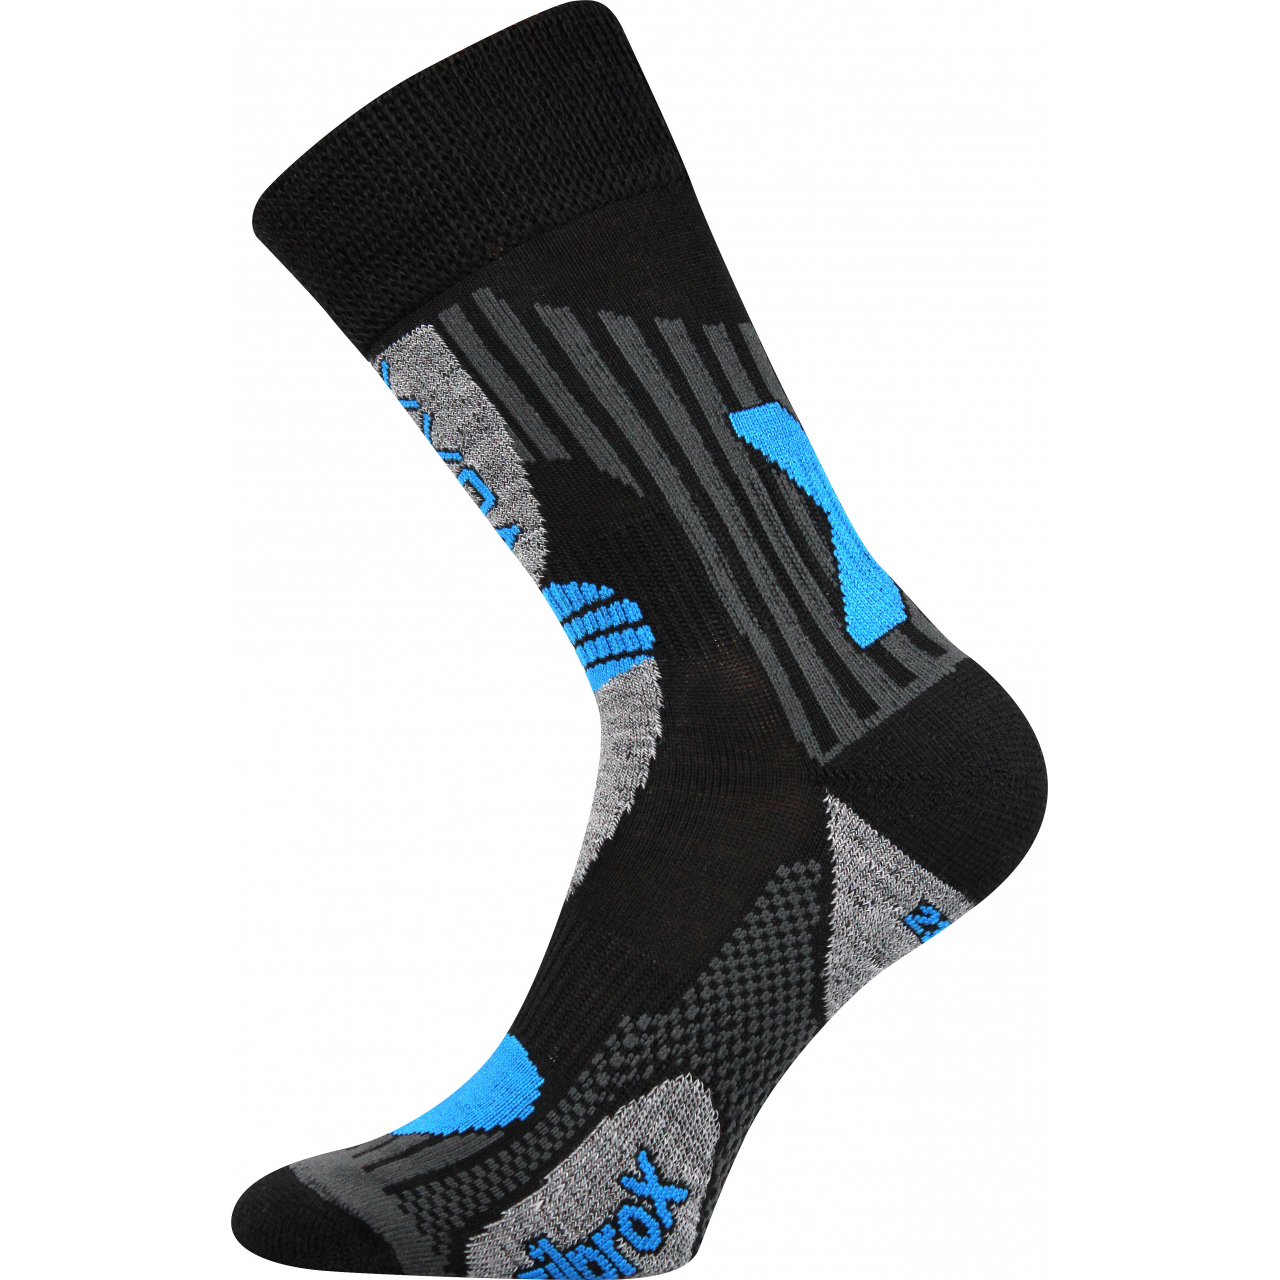 Ponožky unisex termo Voxx Vision - černé-modré, 43-46